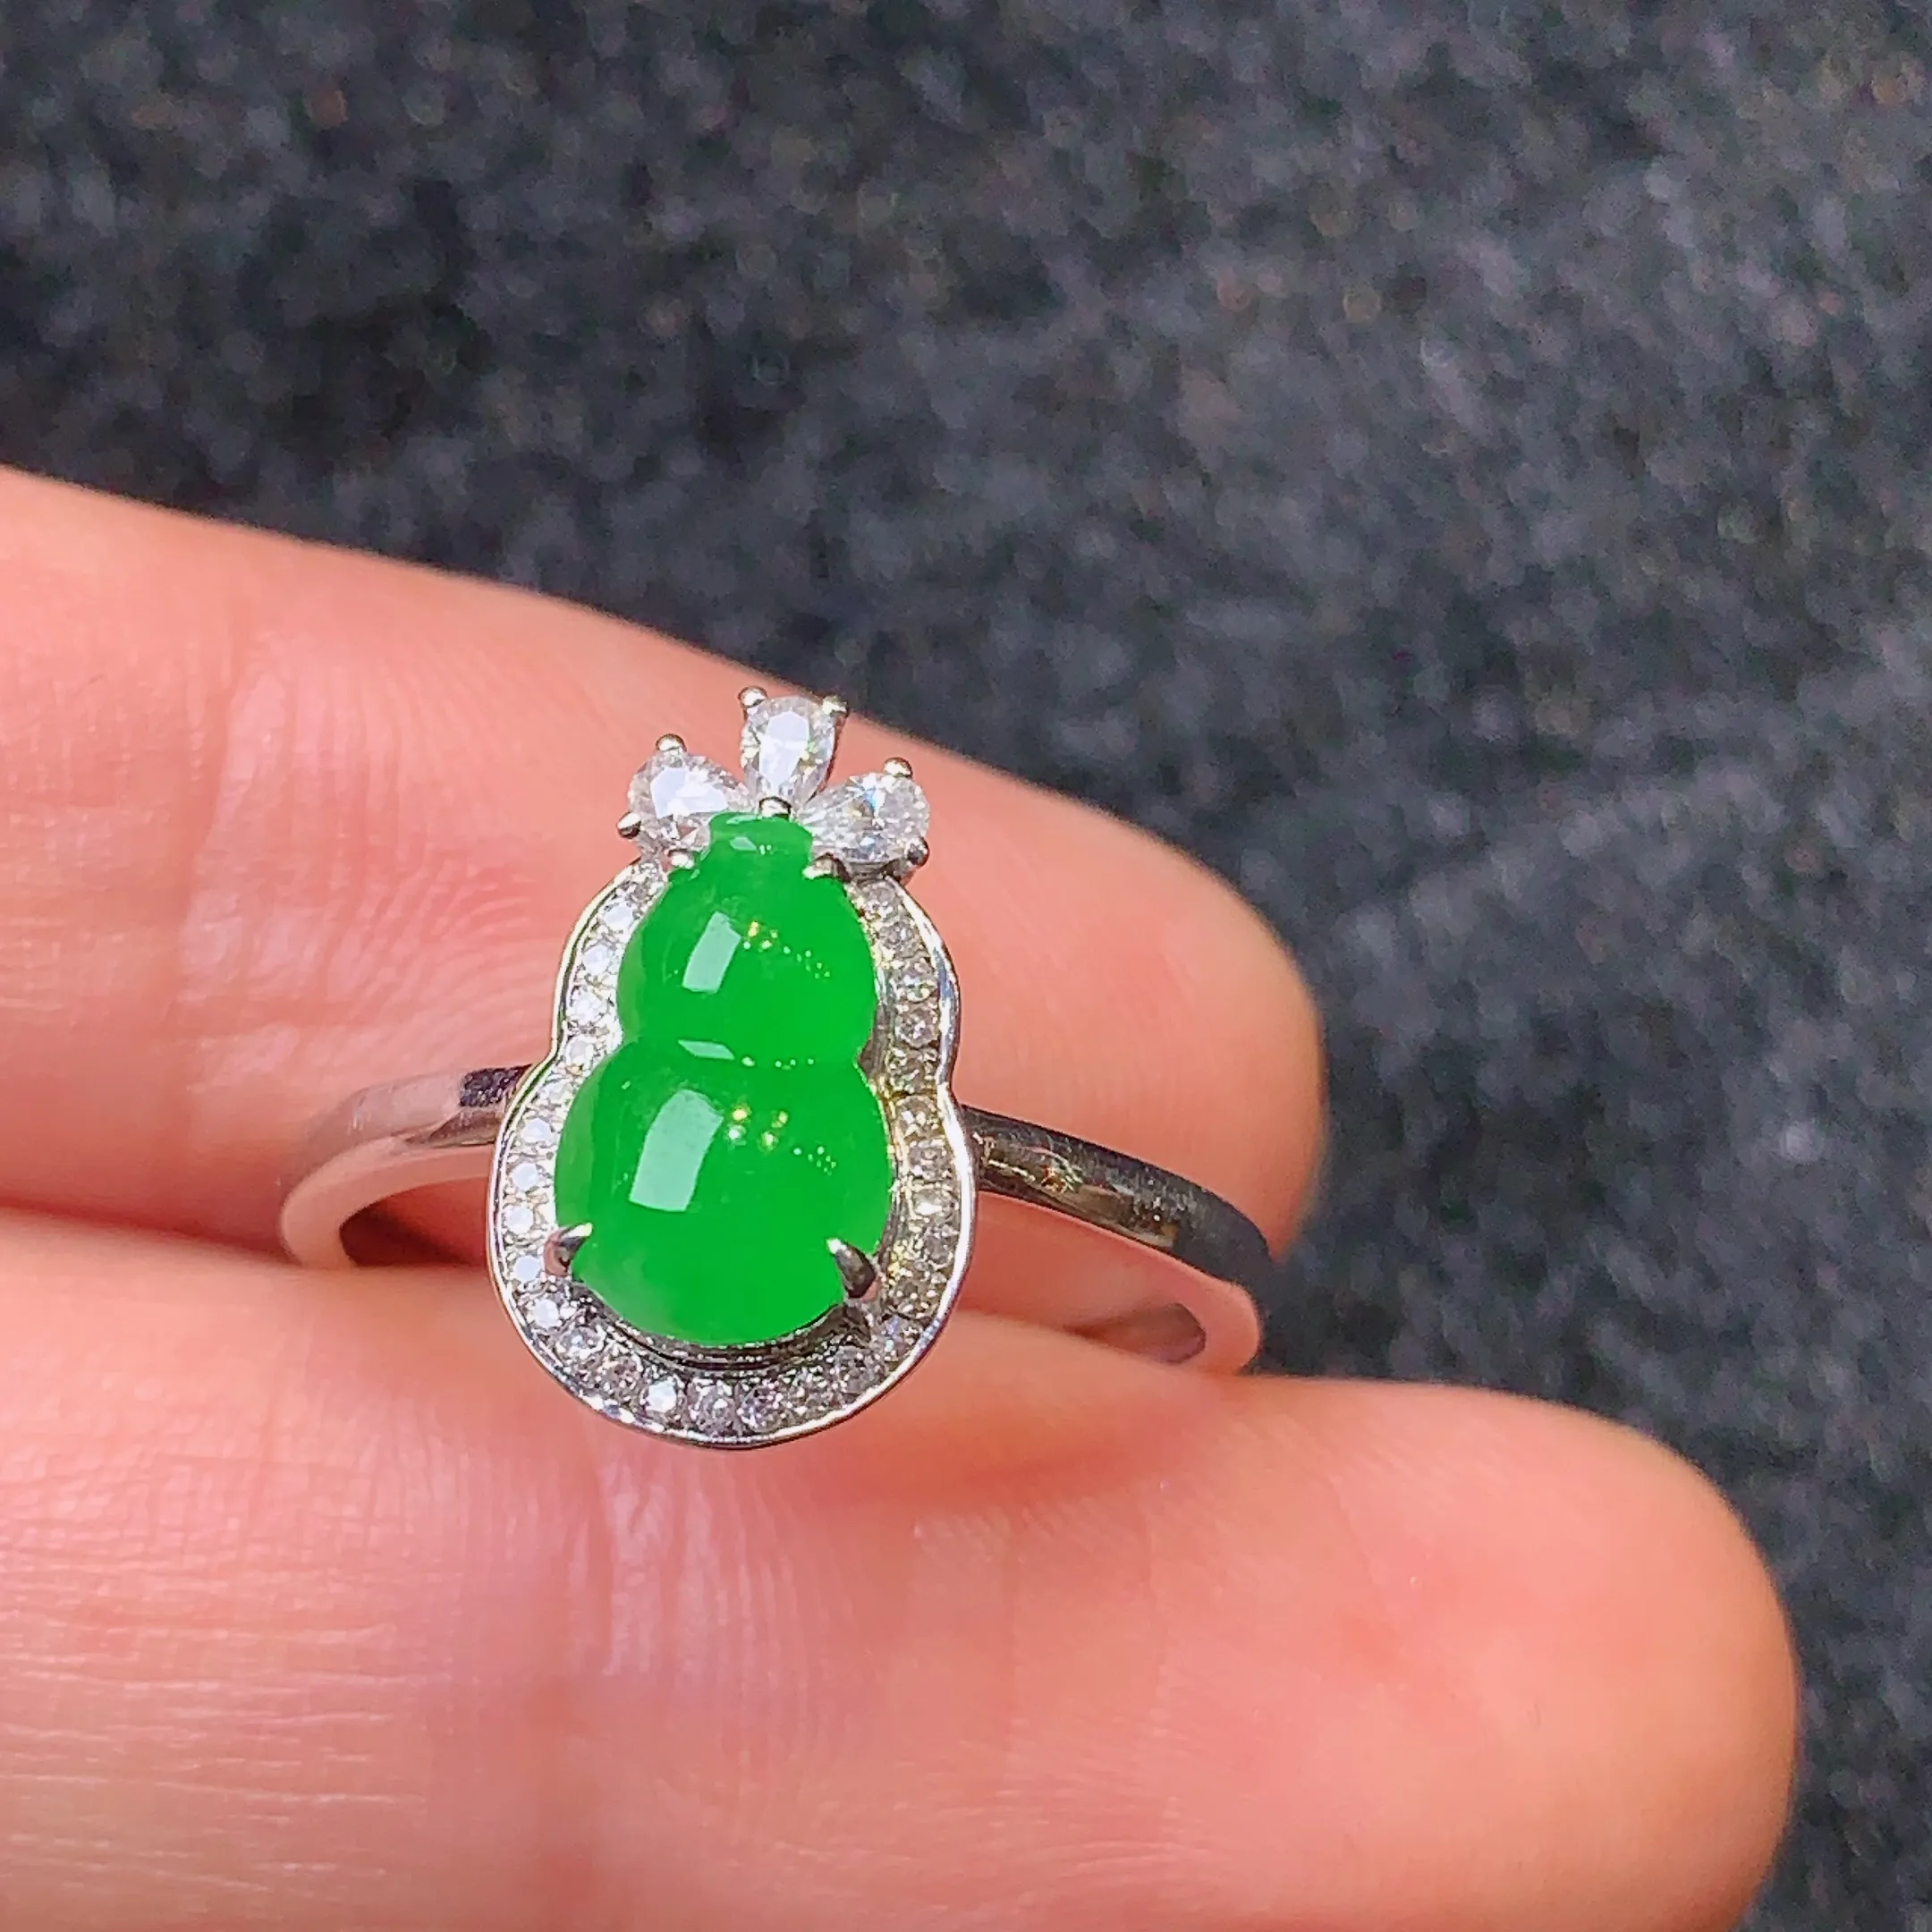 18k金钻镶嵌满绿葫芦戒指 玉质细腻 款式新颖时尚高贵优雅 圈口13.5 整体尺寸13.6*8.5*5.6